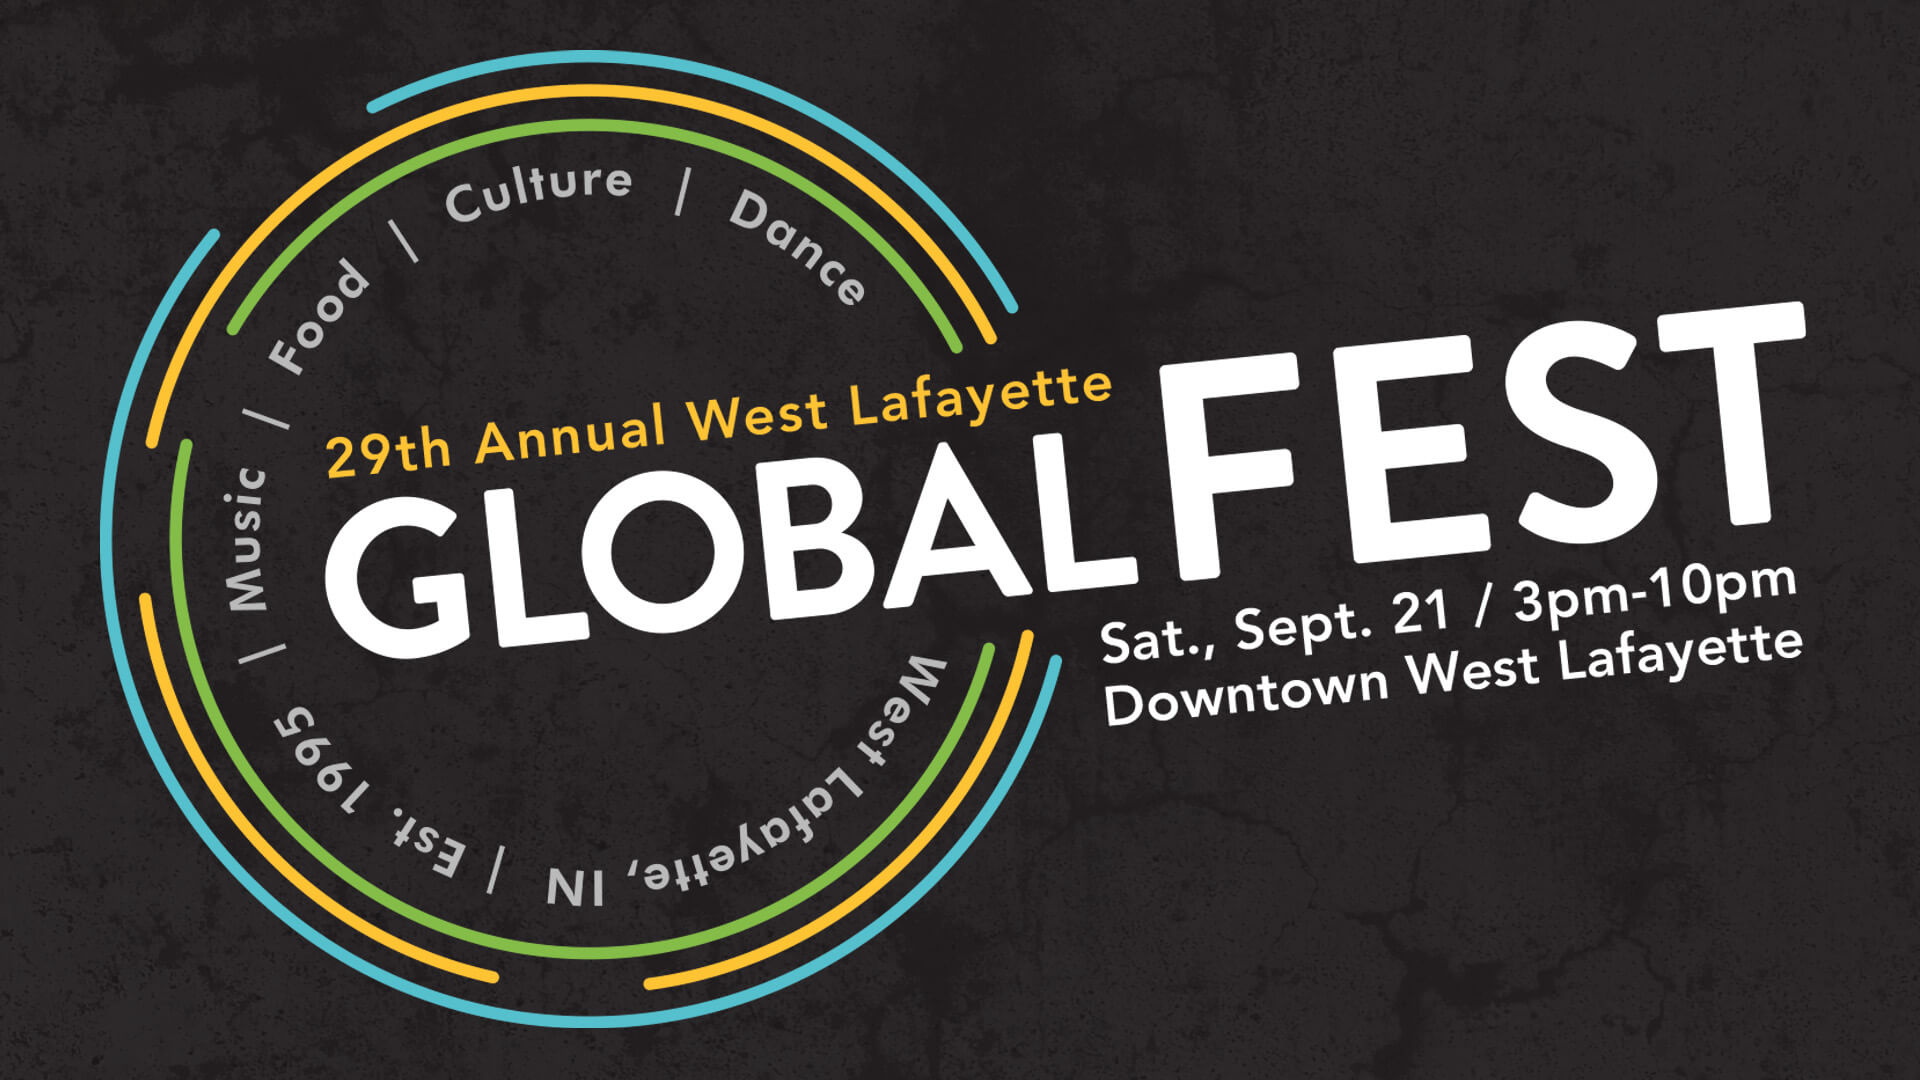 29th Annual West Lafayette Global Fest